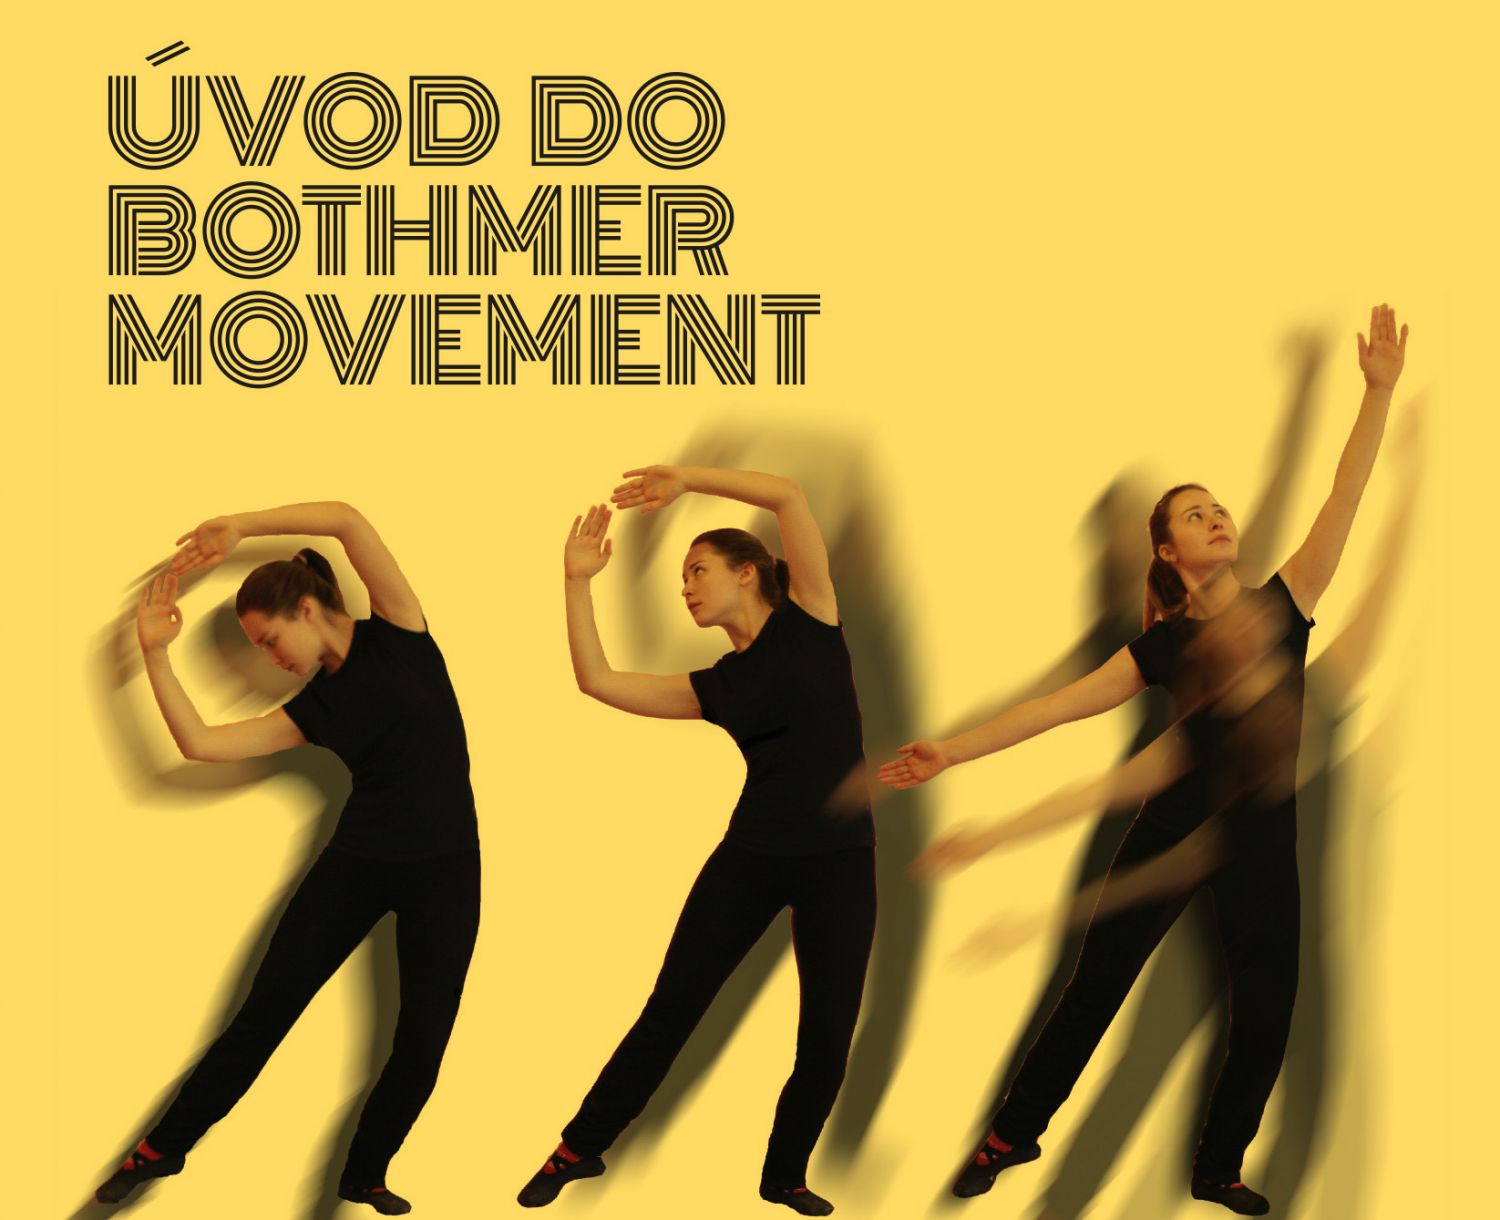 Úvod do Bothmer Movement - víkednový workshop s Adrianem Constantinescu